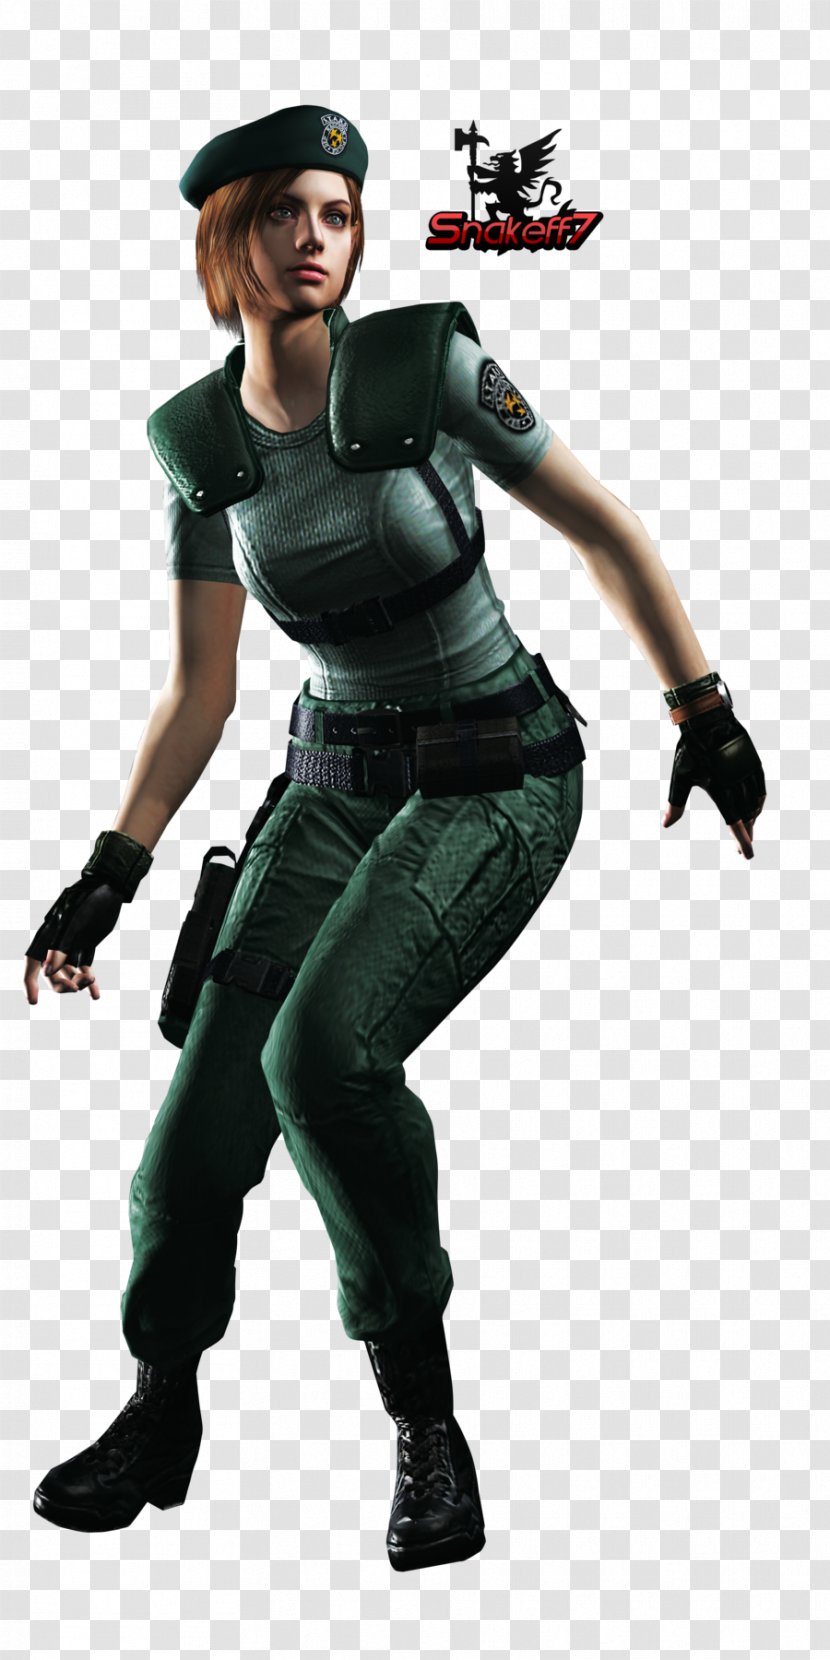 Resident Evil 5 3: Nemesis Evil: Revelations Jill Valentine - Chris Redfield Transparent PNG